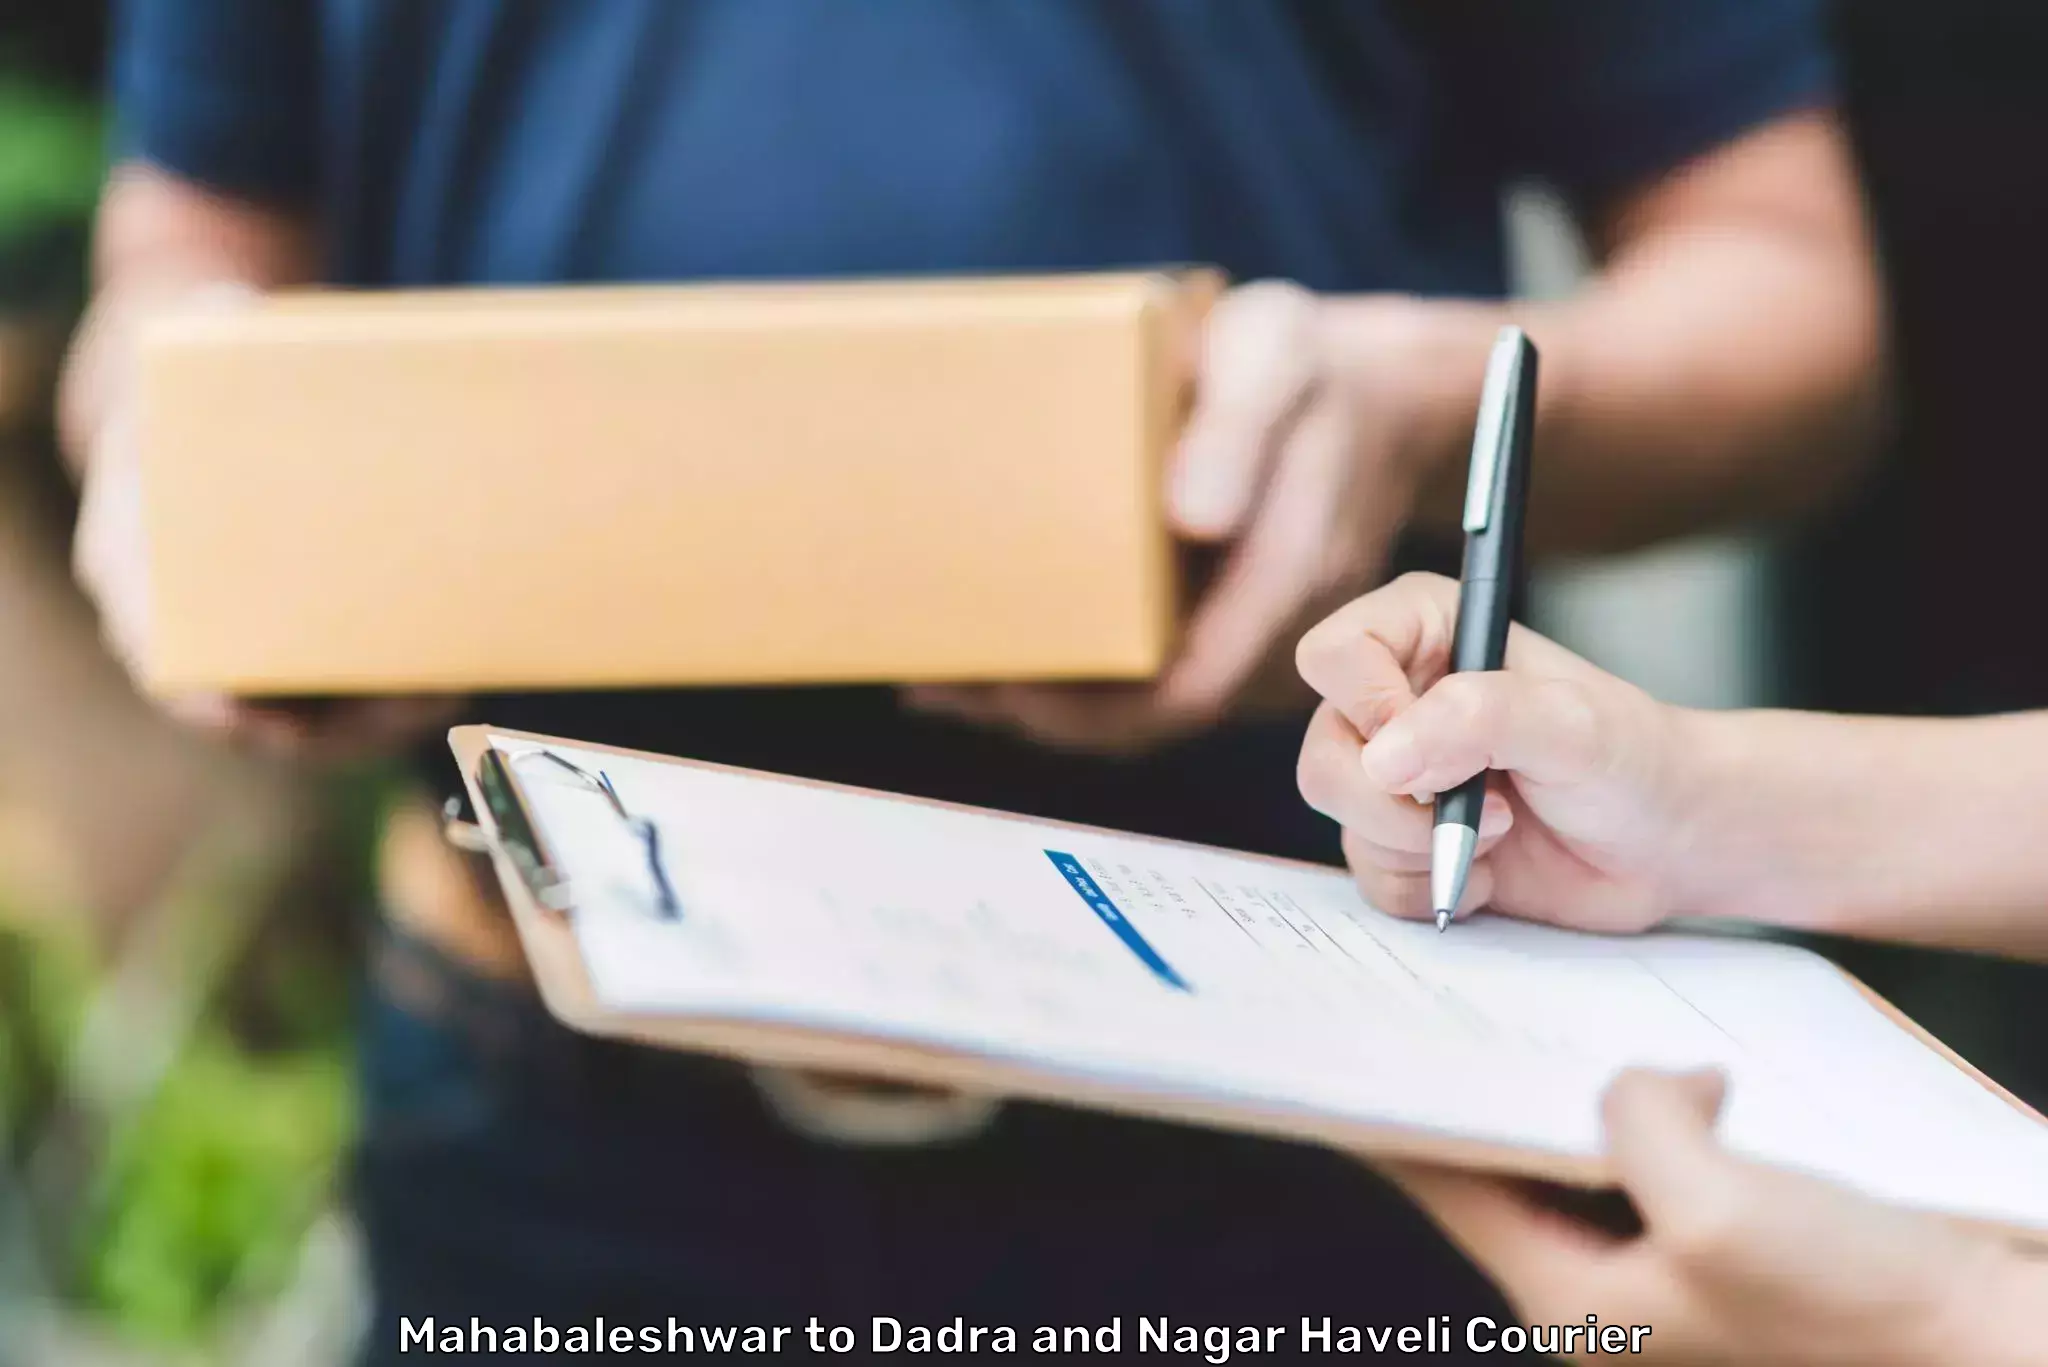 Bulk courier orders Mahabaleshwar to Dadra and Nagar Haveli